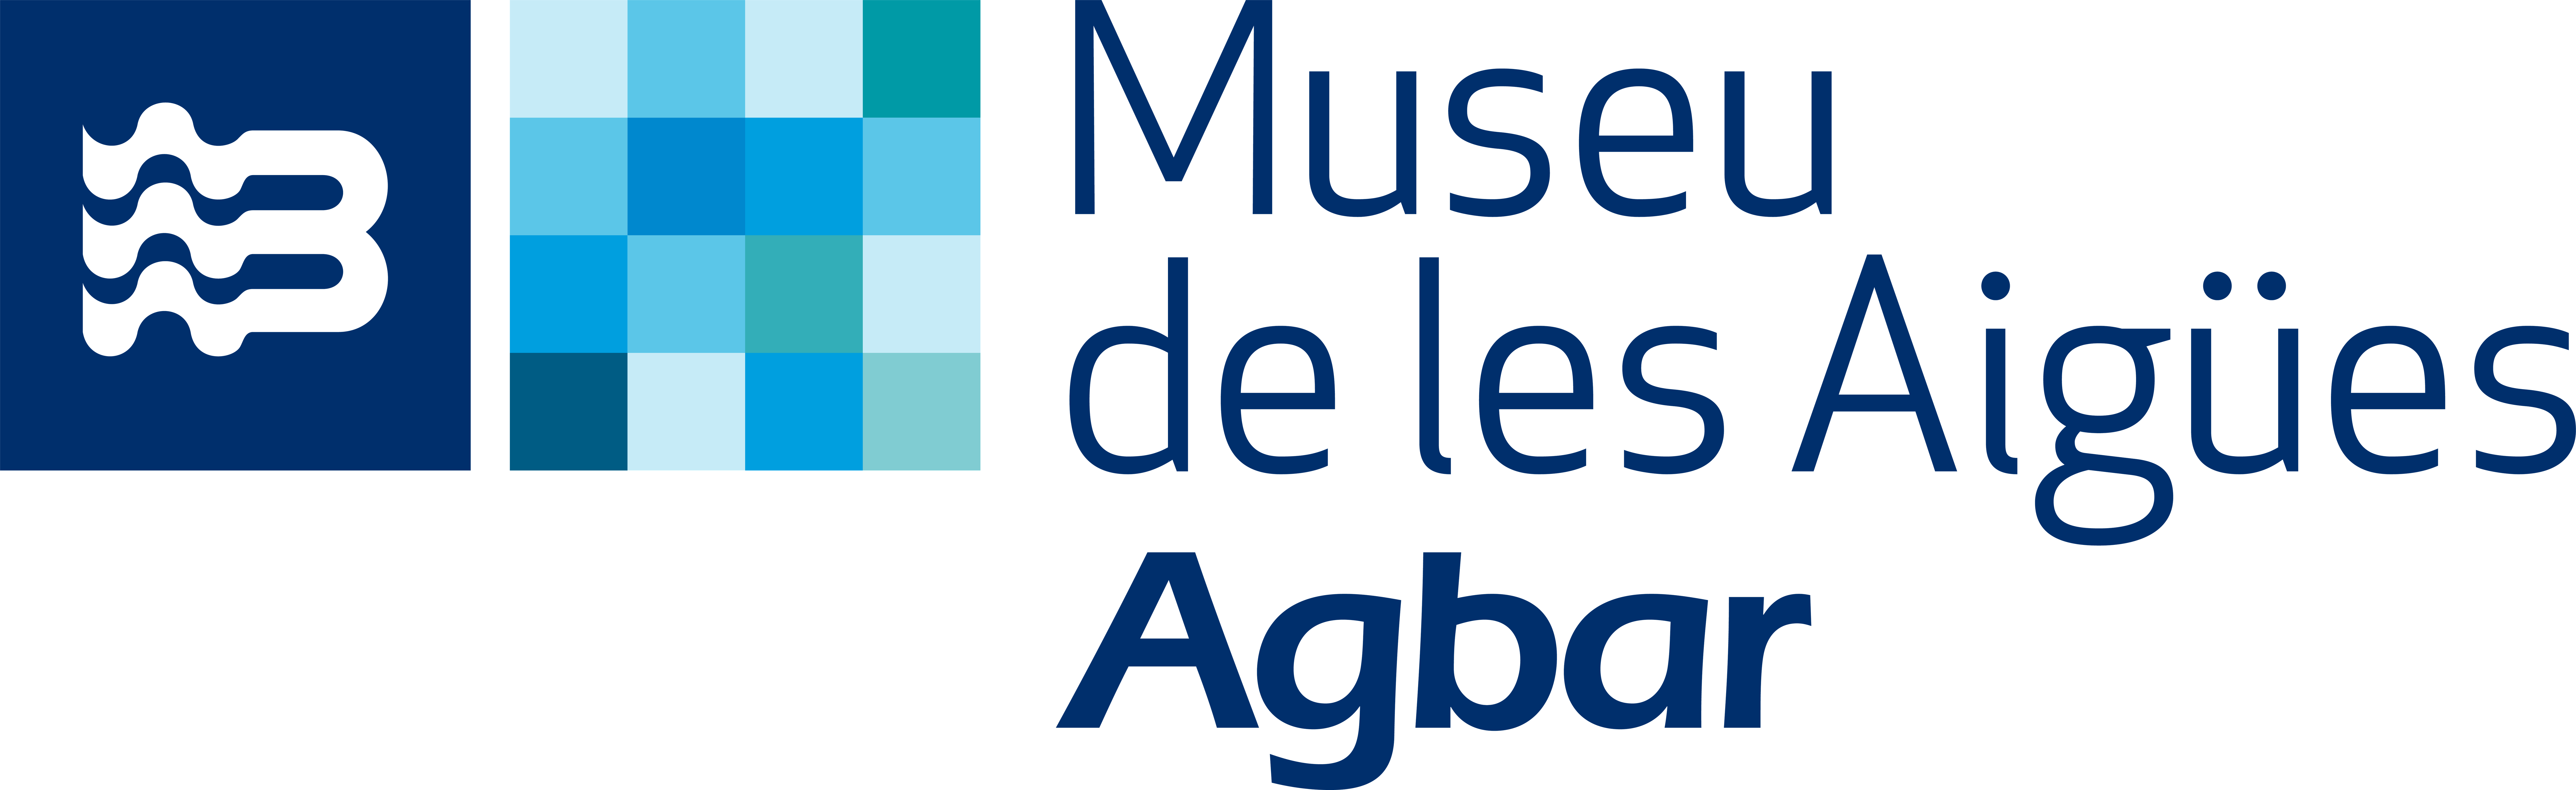 Museu Agbar